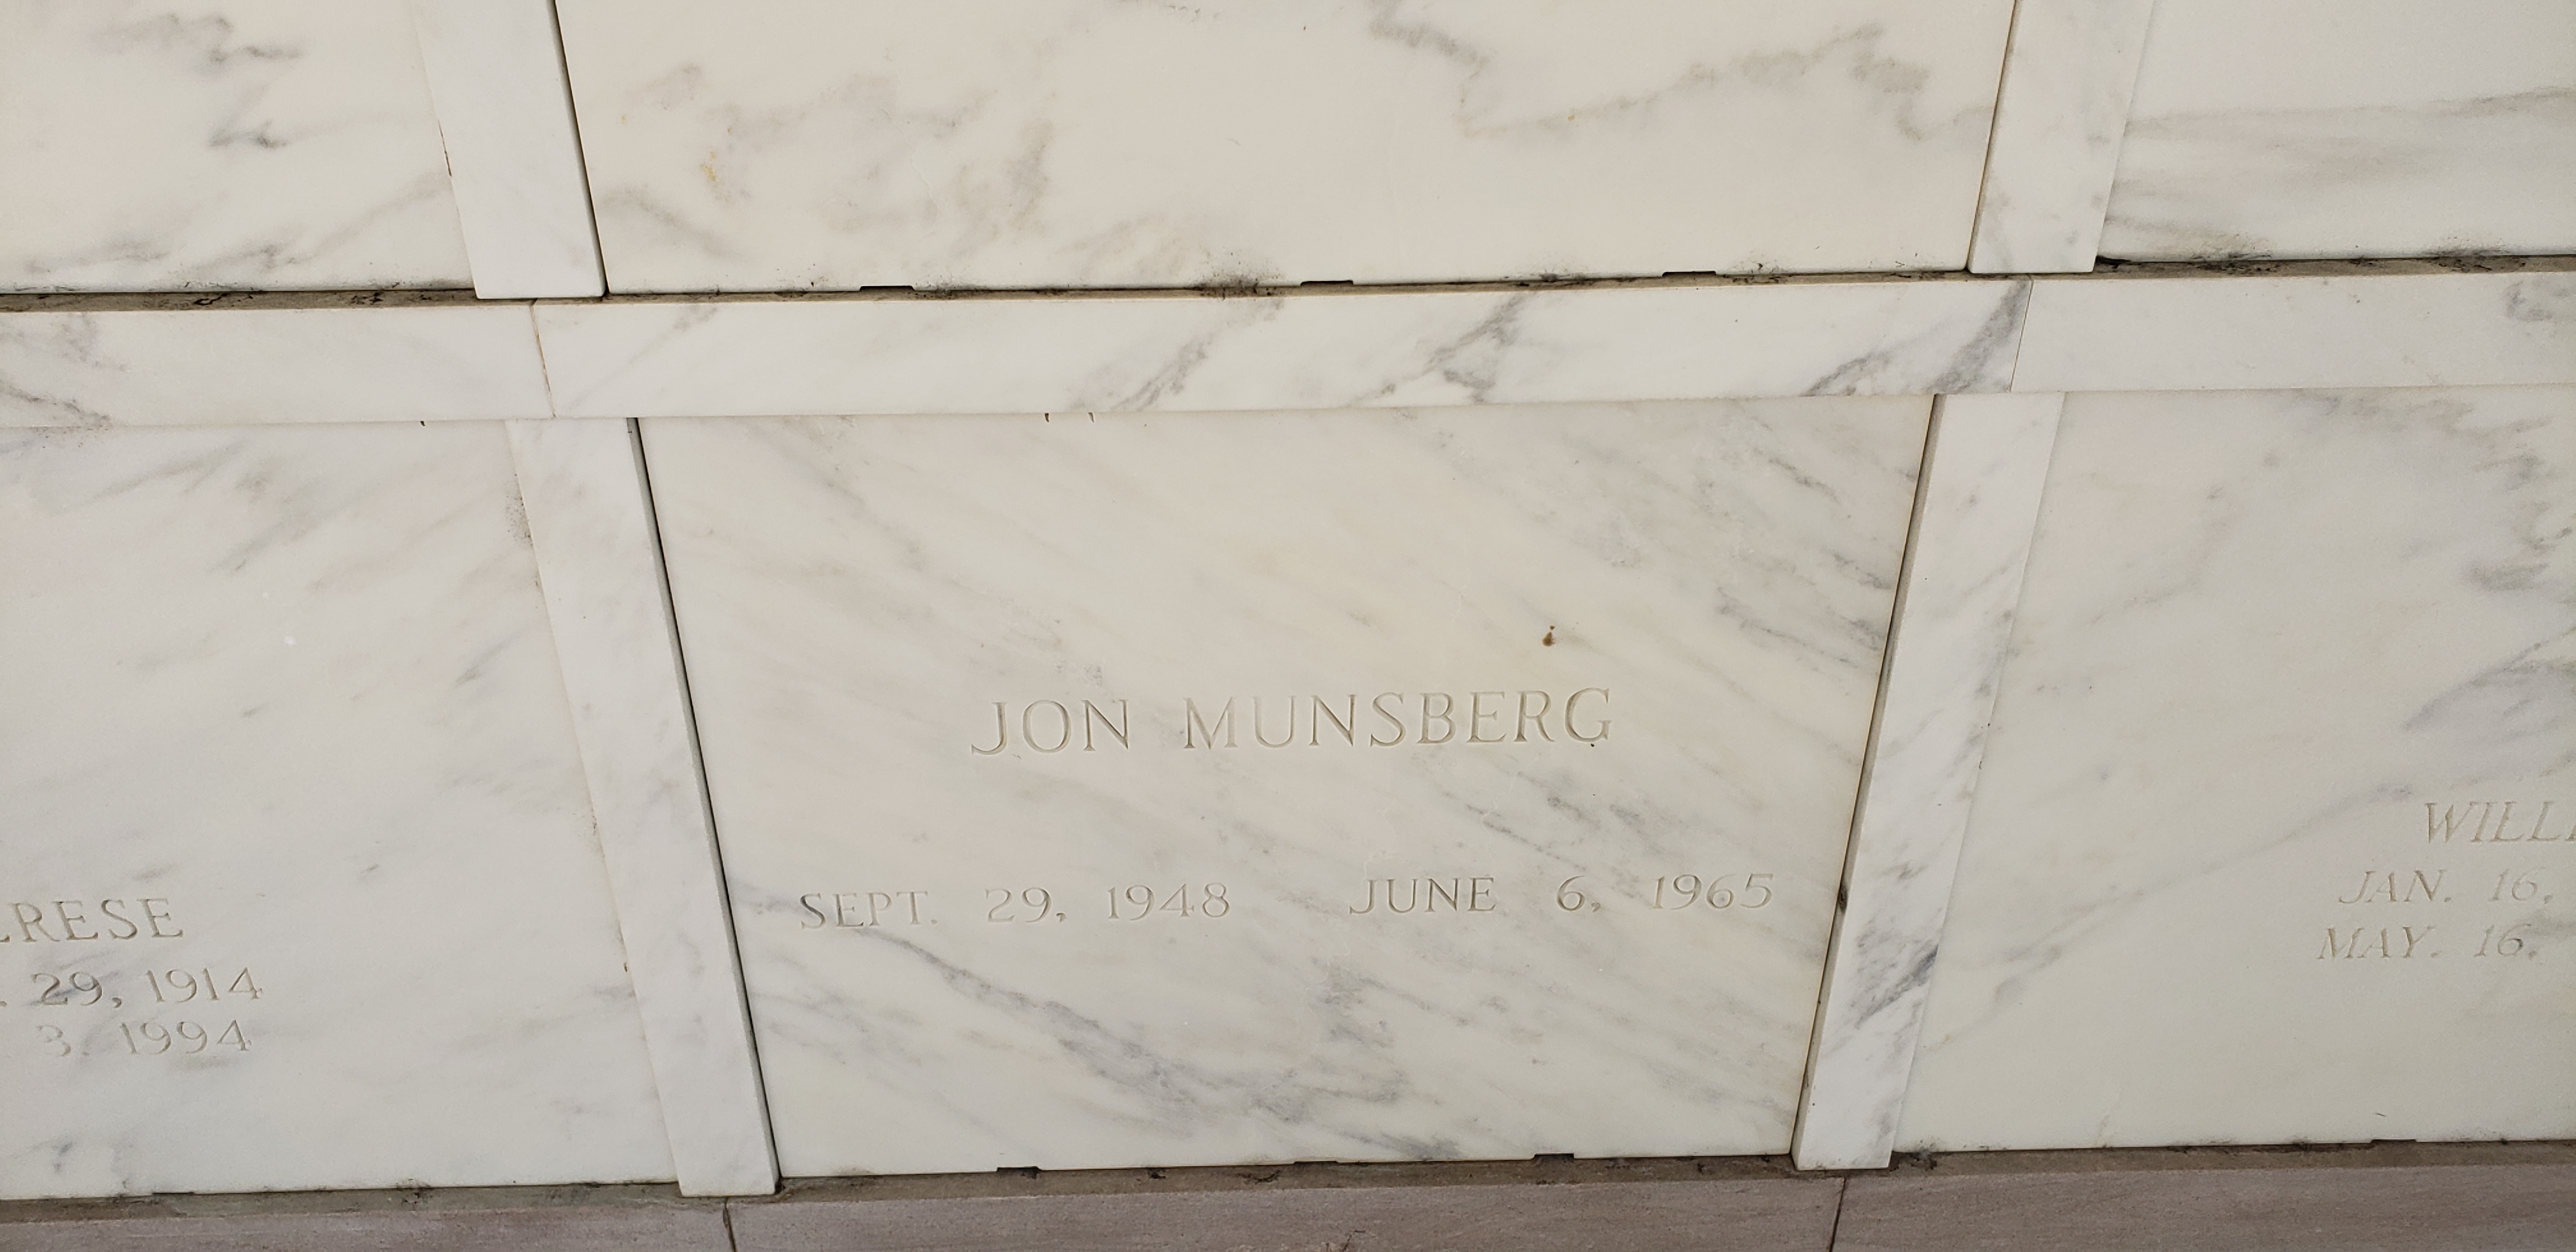 Jon Munsberg